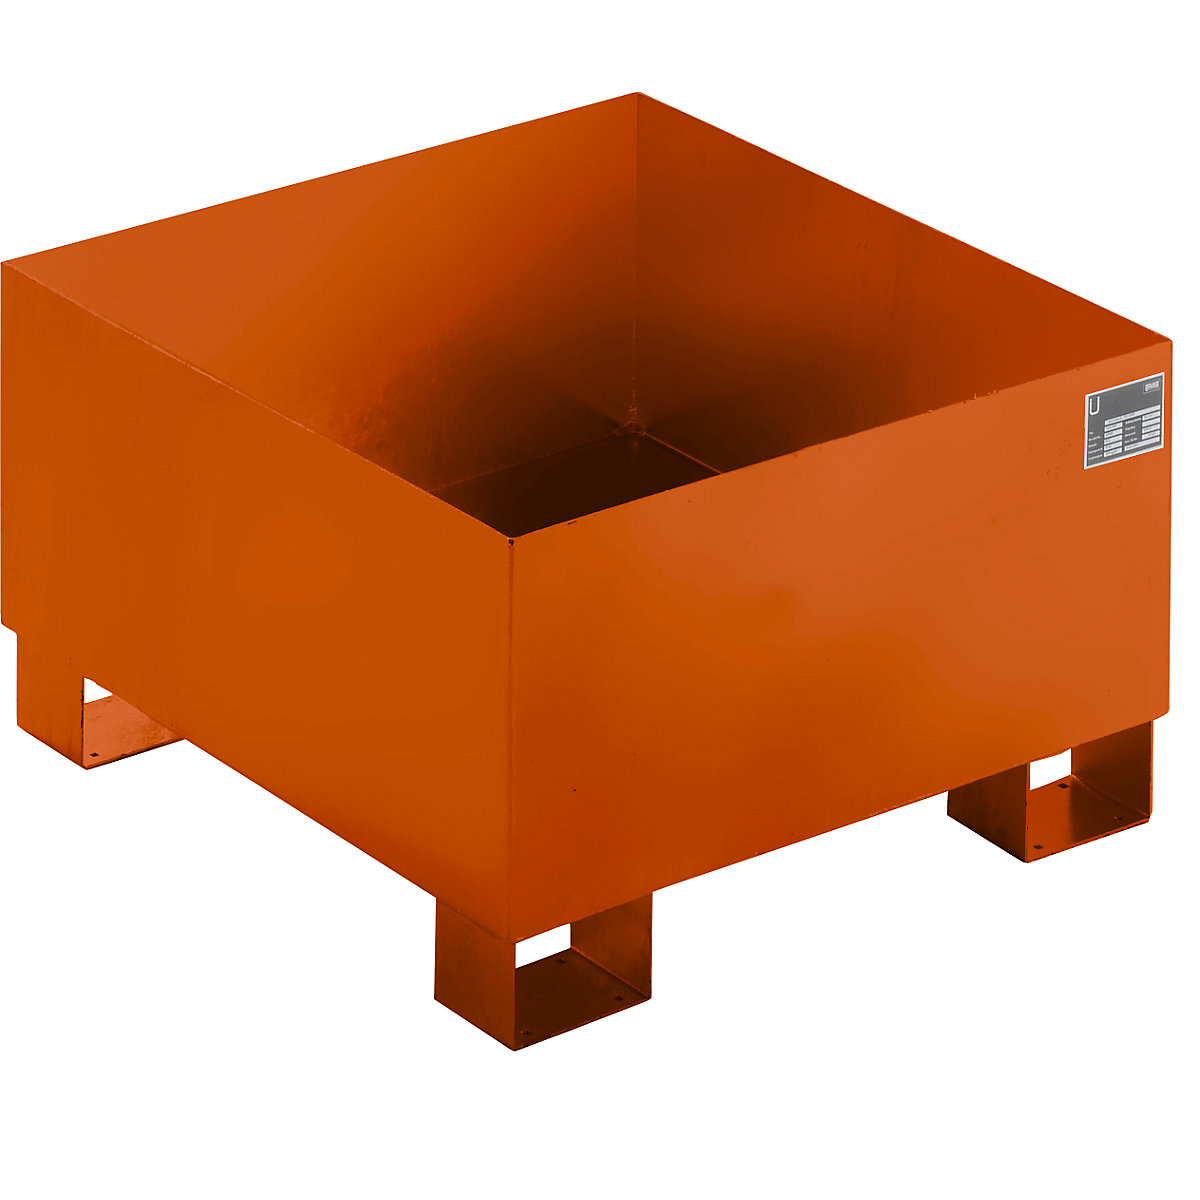 EUROKRAFTbasic – Sump tray made from sheet steel, LxWxH 800 x 800 x 465 mm, orange RAL 2000